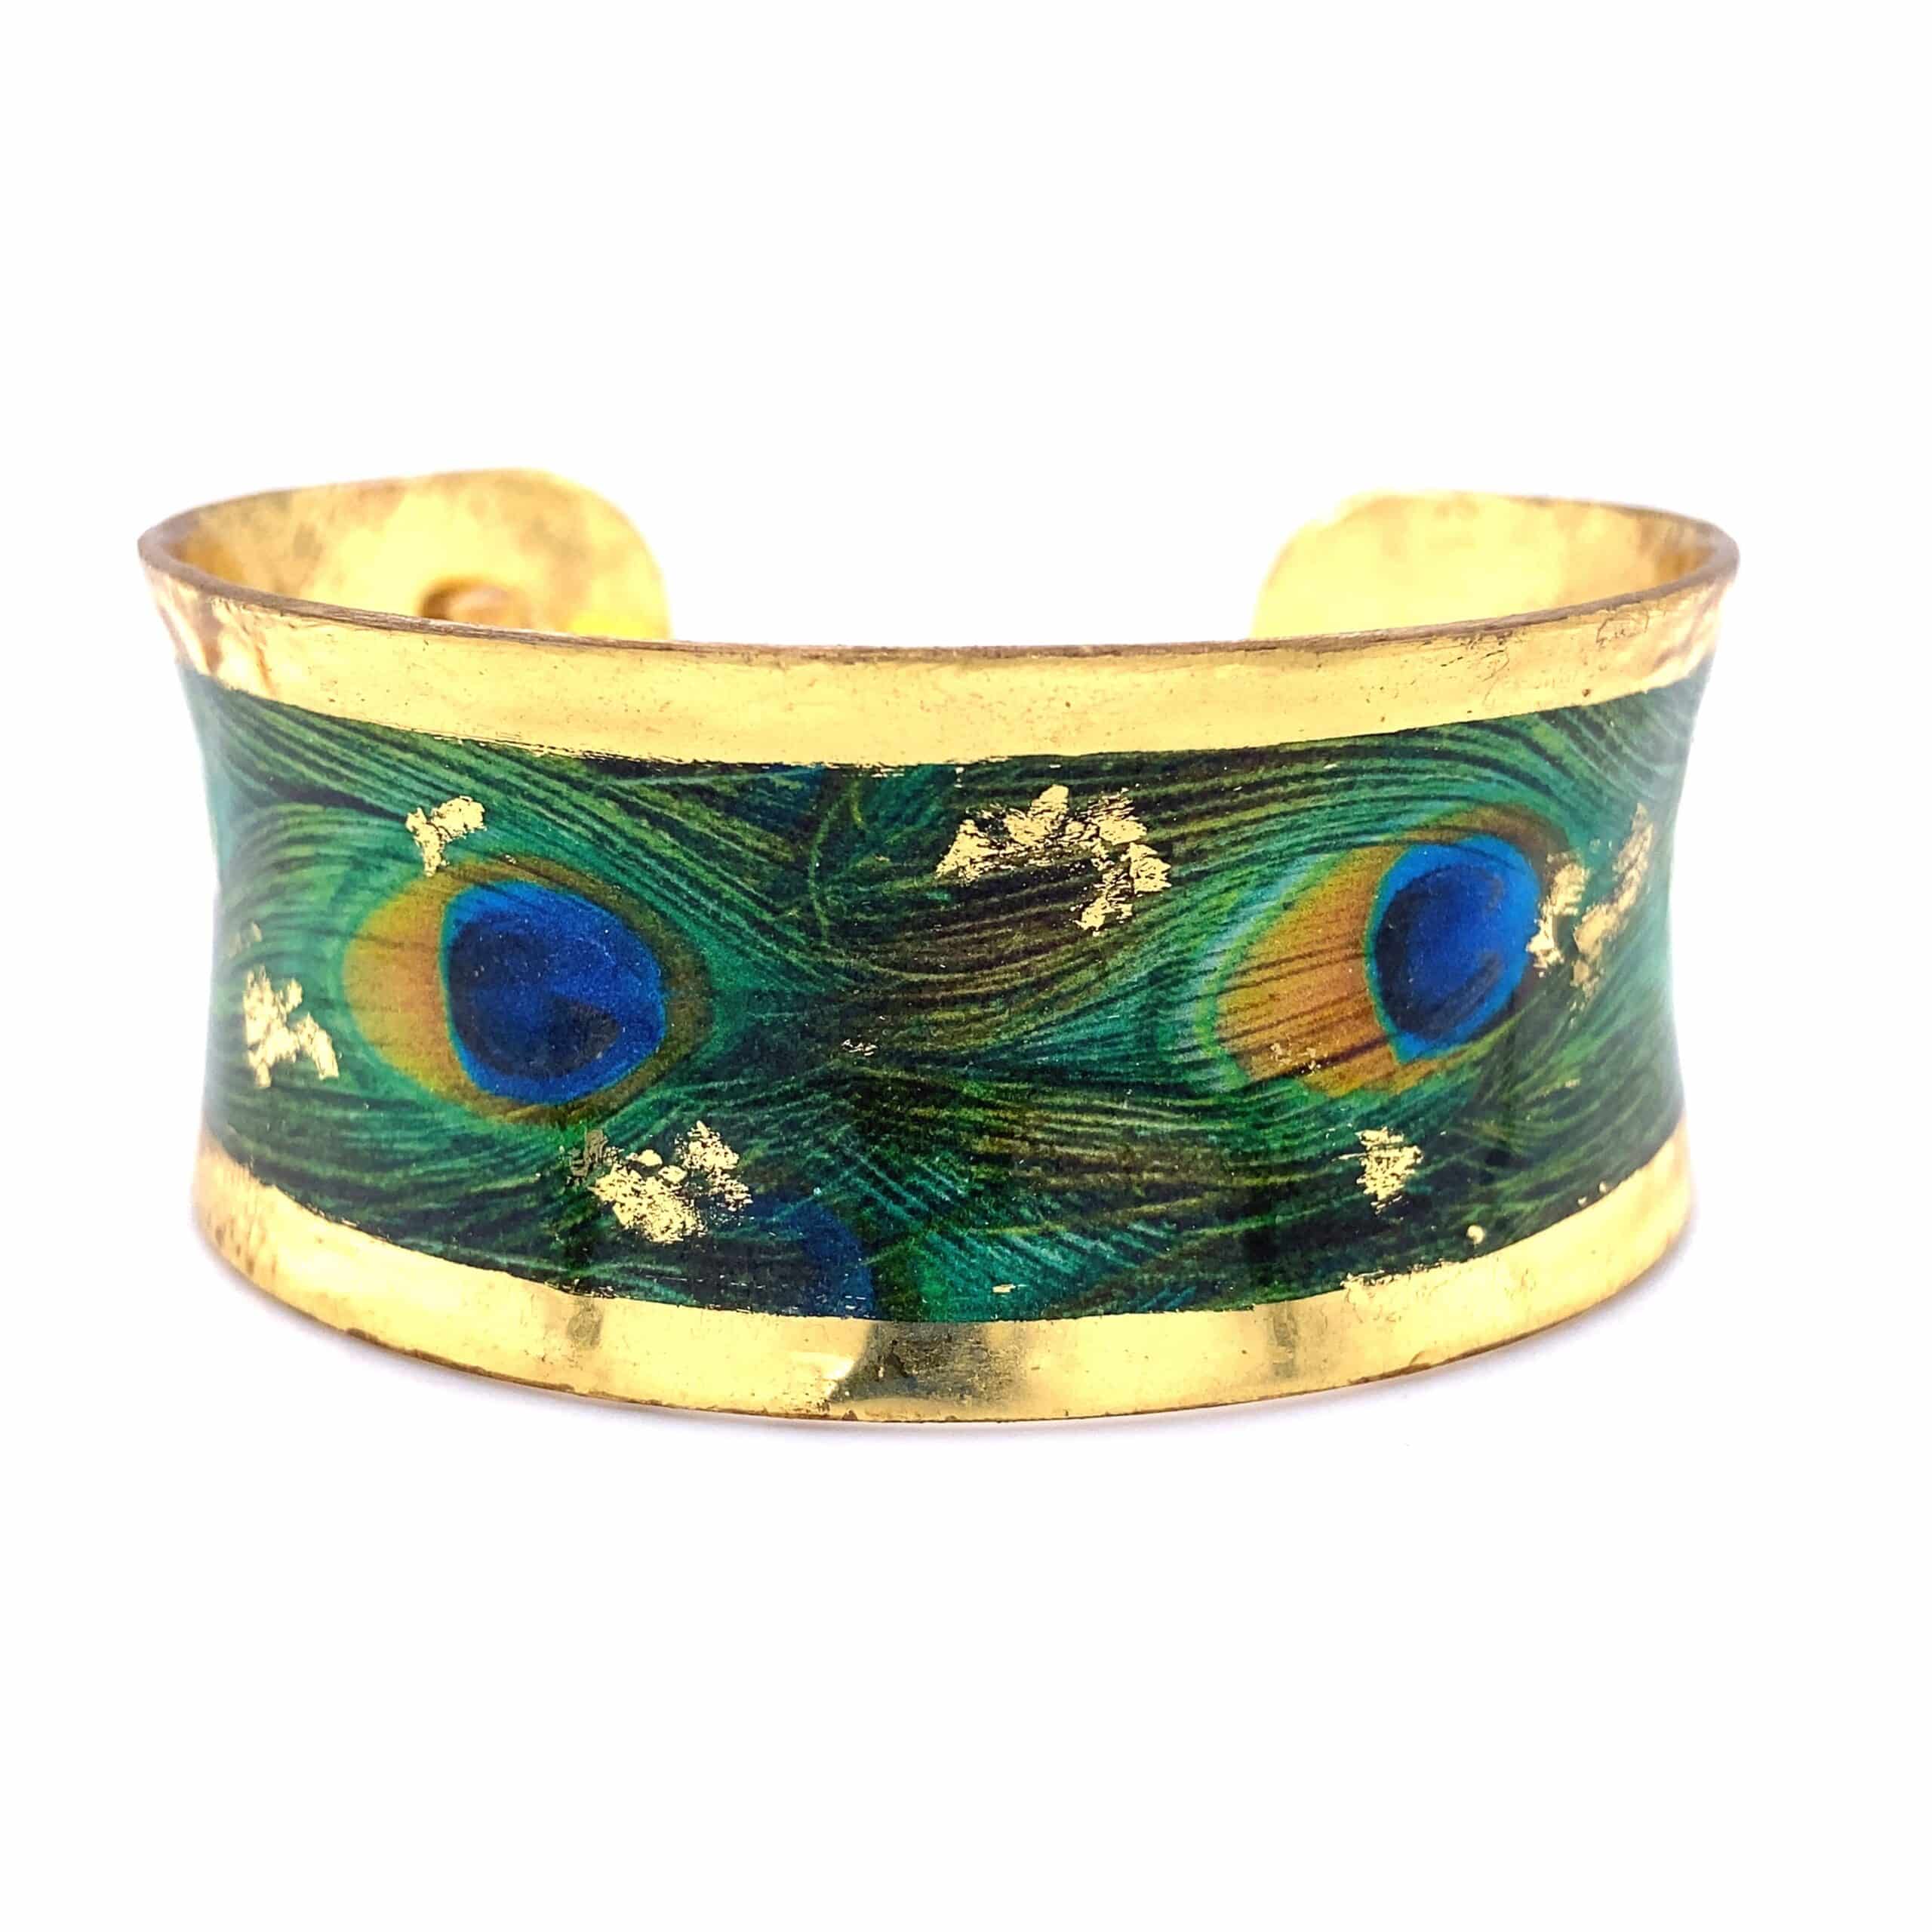 Buy quality 22k gold new Design bracelet in Ahmedabad